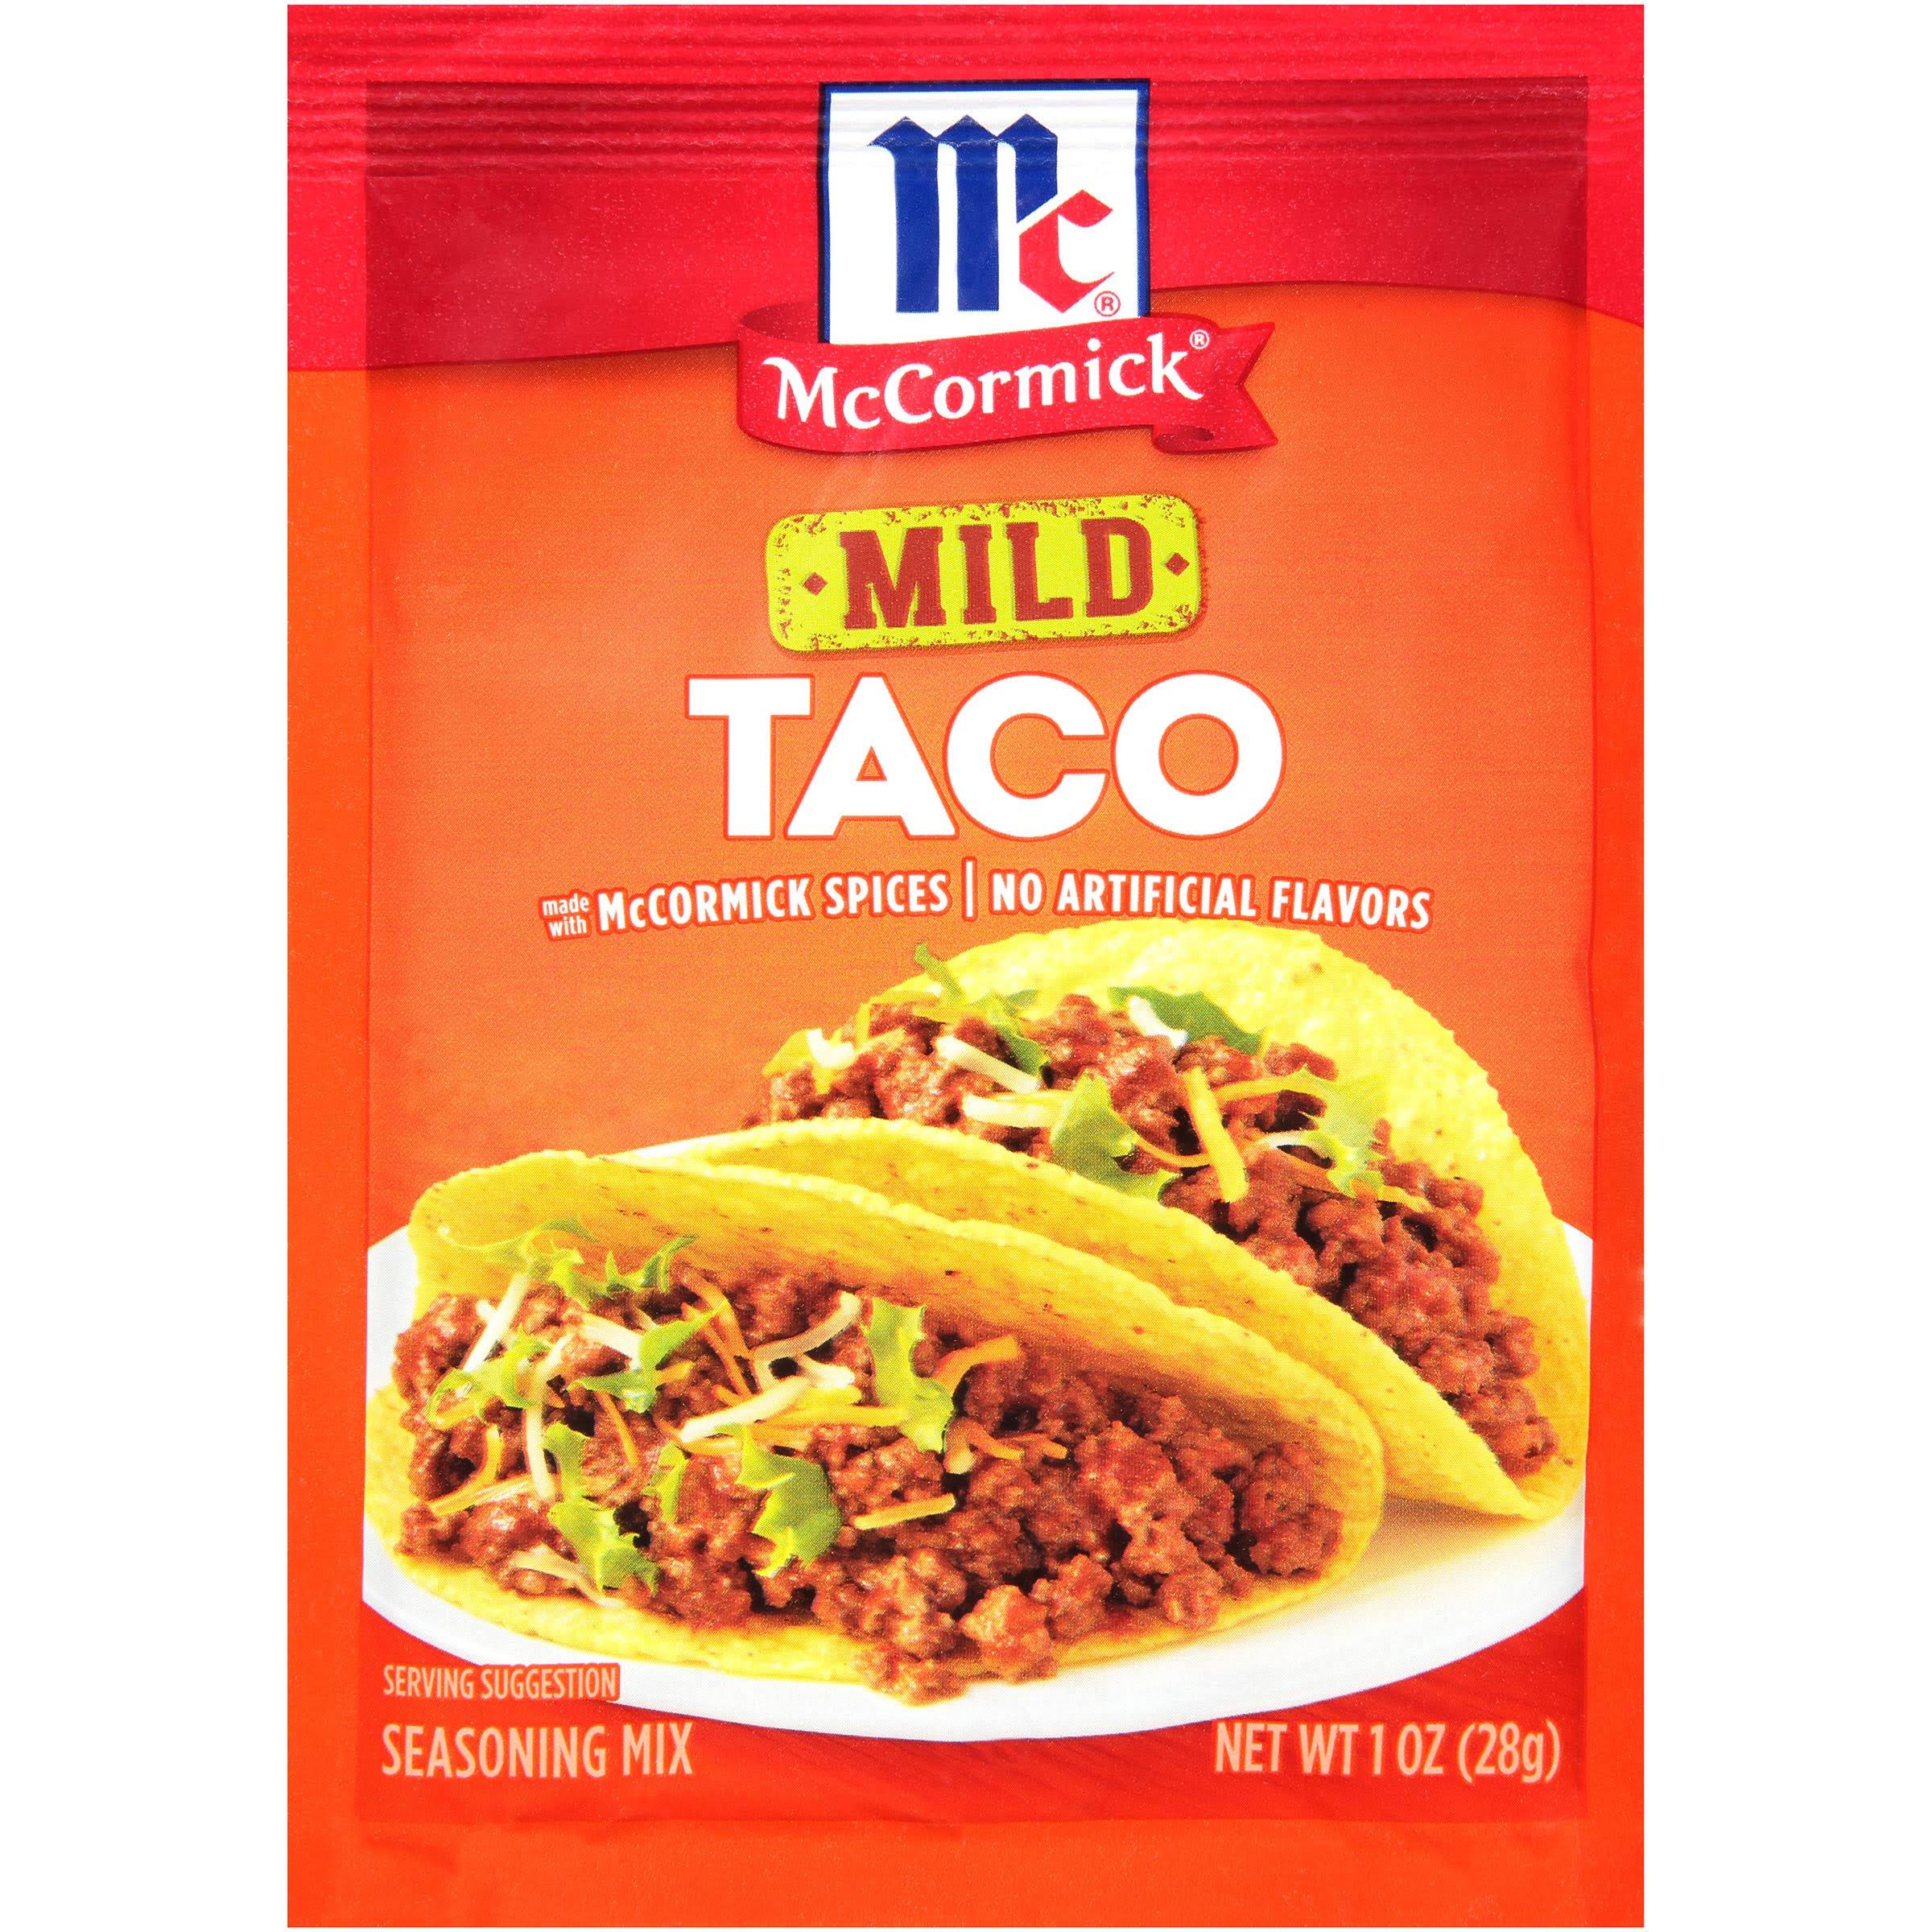 McCormick Taco Seasoning Mix - 1oz, Mild